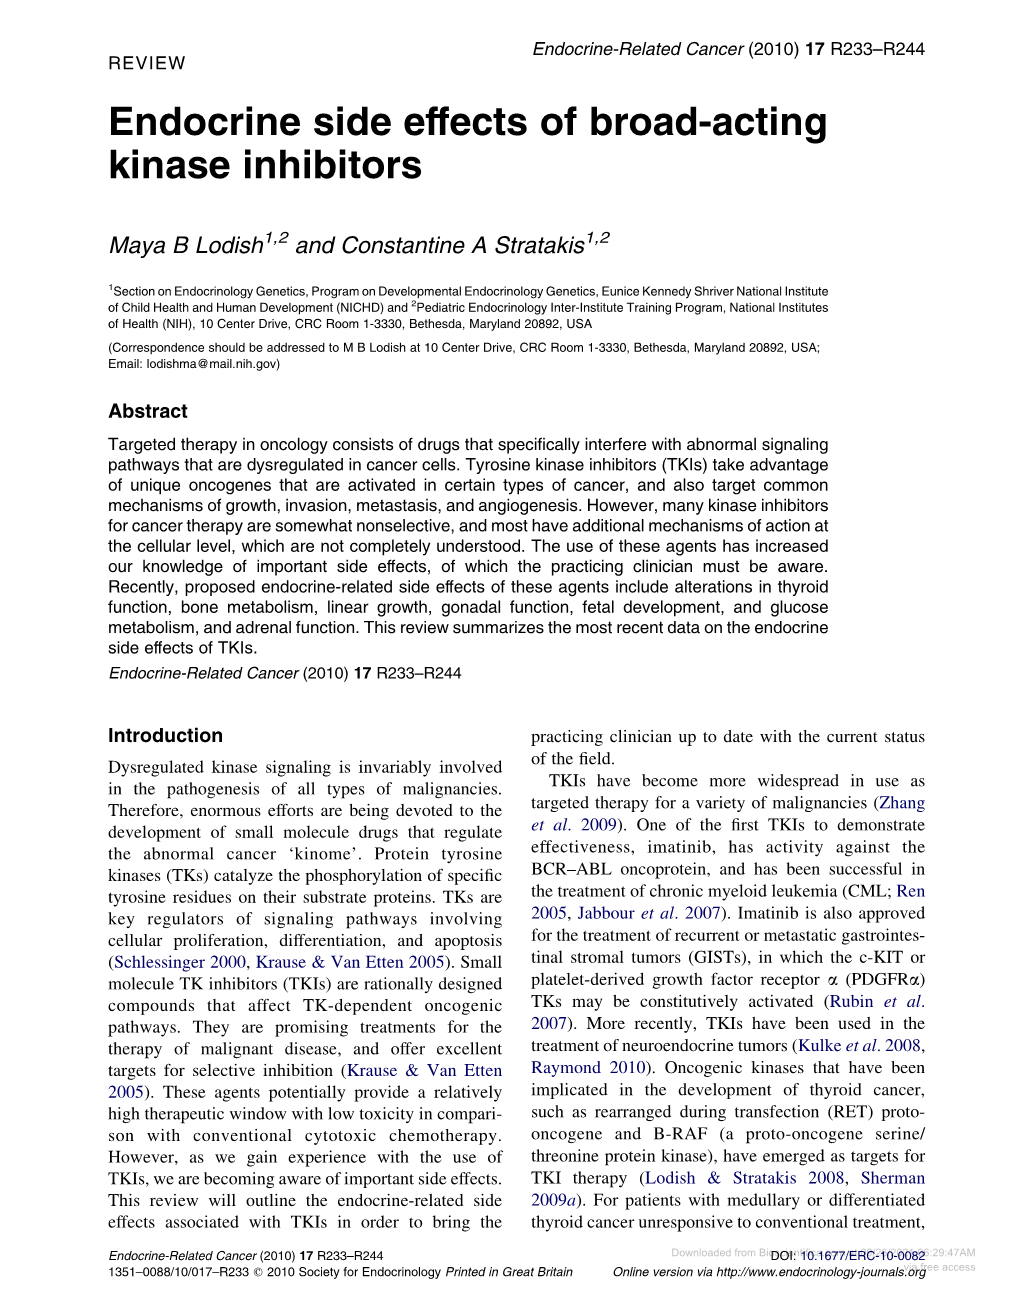 Endocrine Side Effects of Broad-Acting Kinase Inhibitors